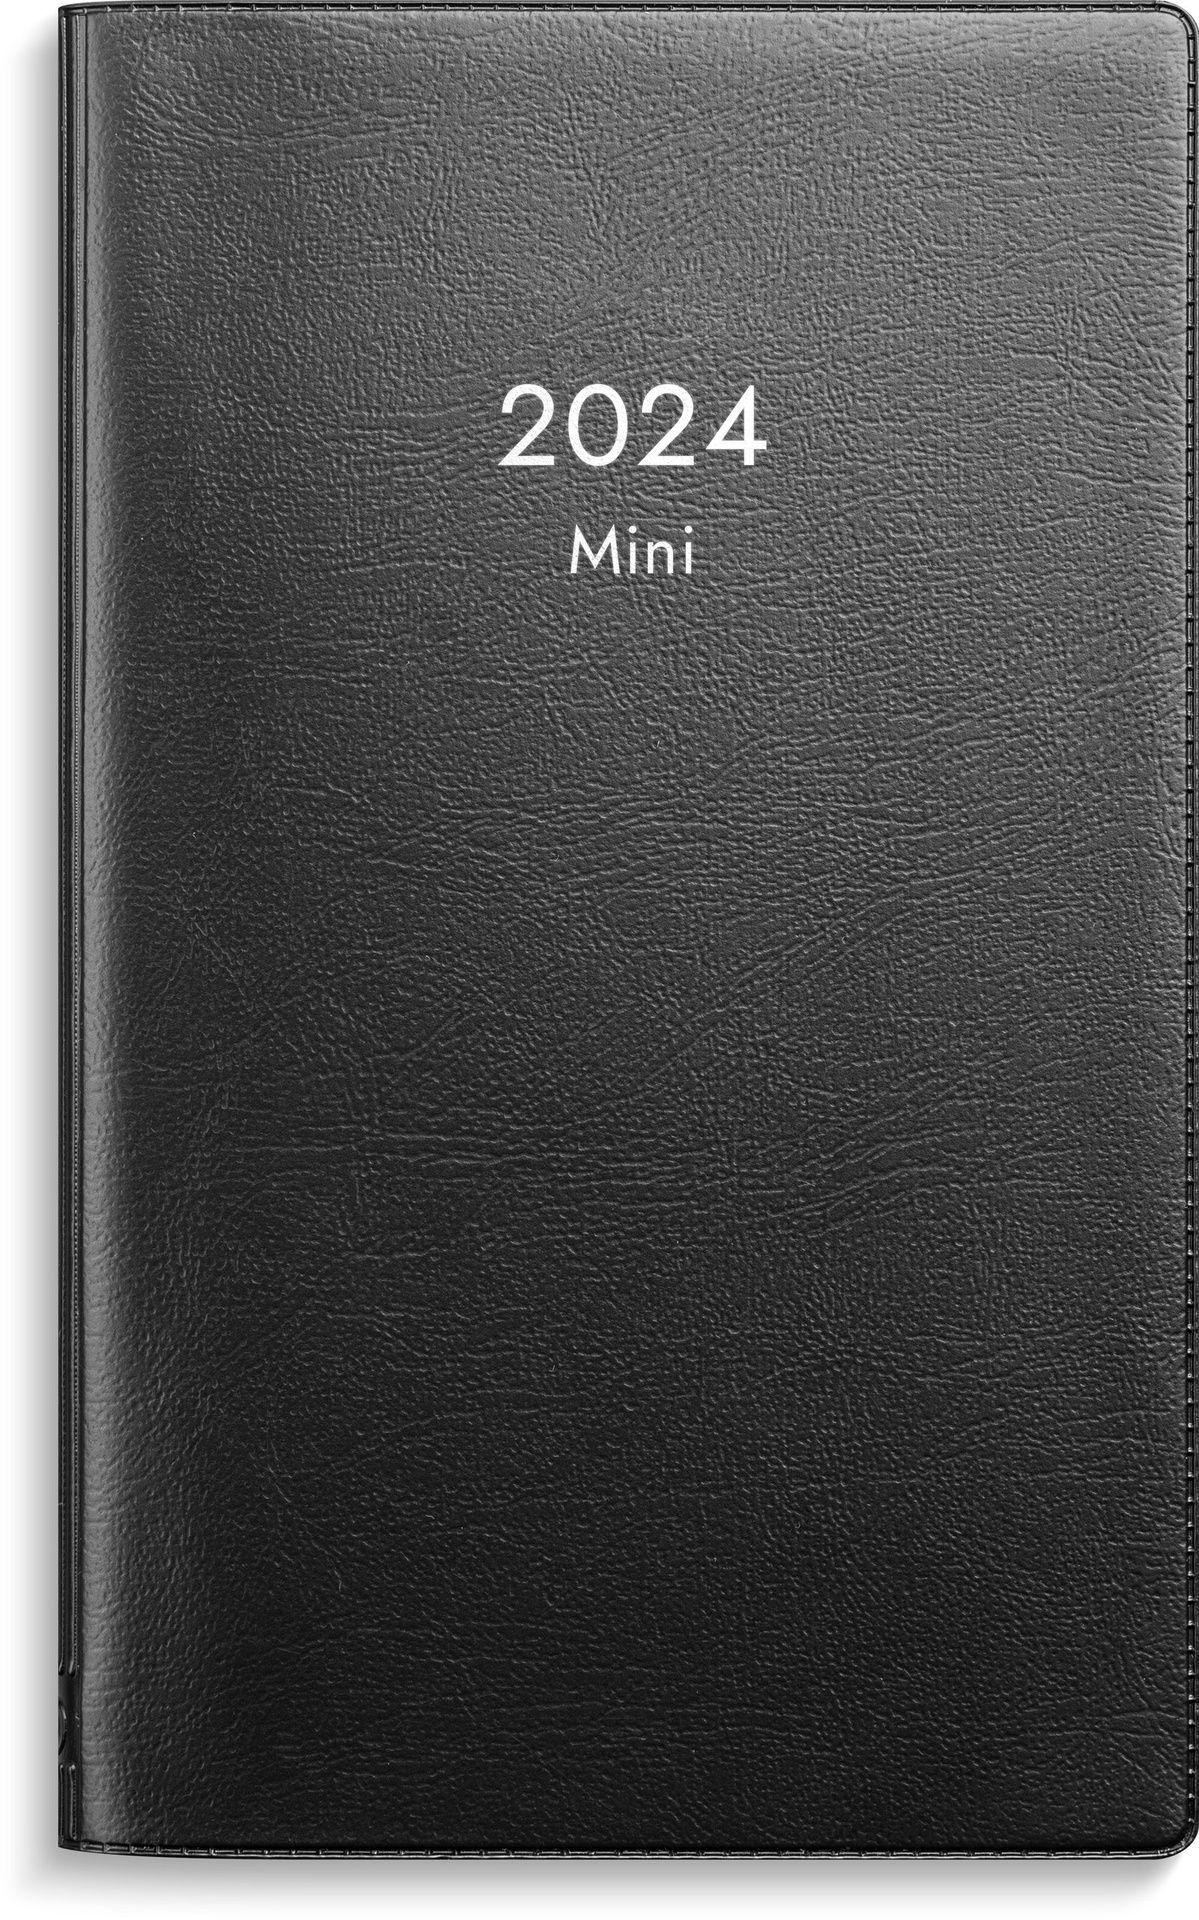 [61321224] Kalender 2024 Mini svart plast